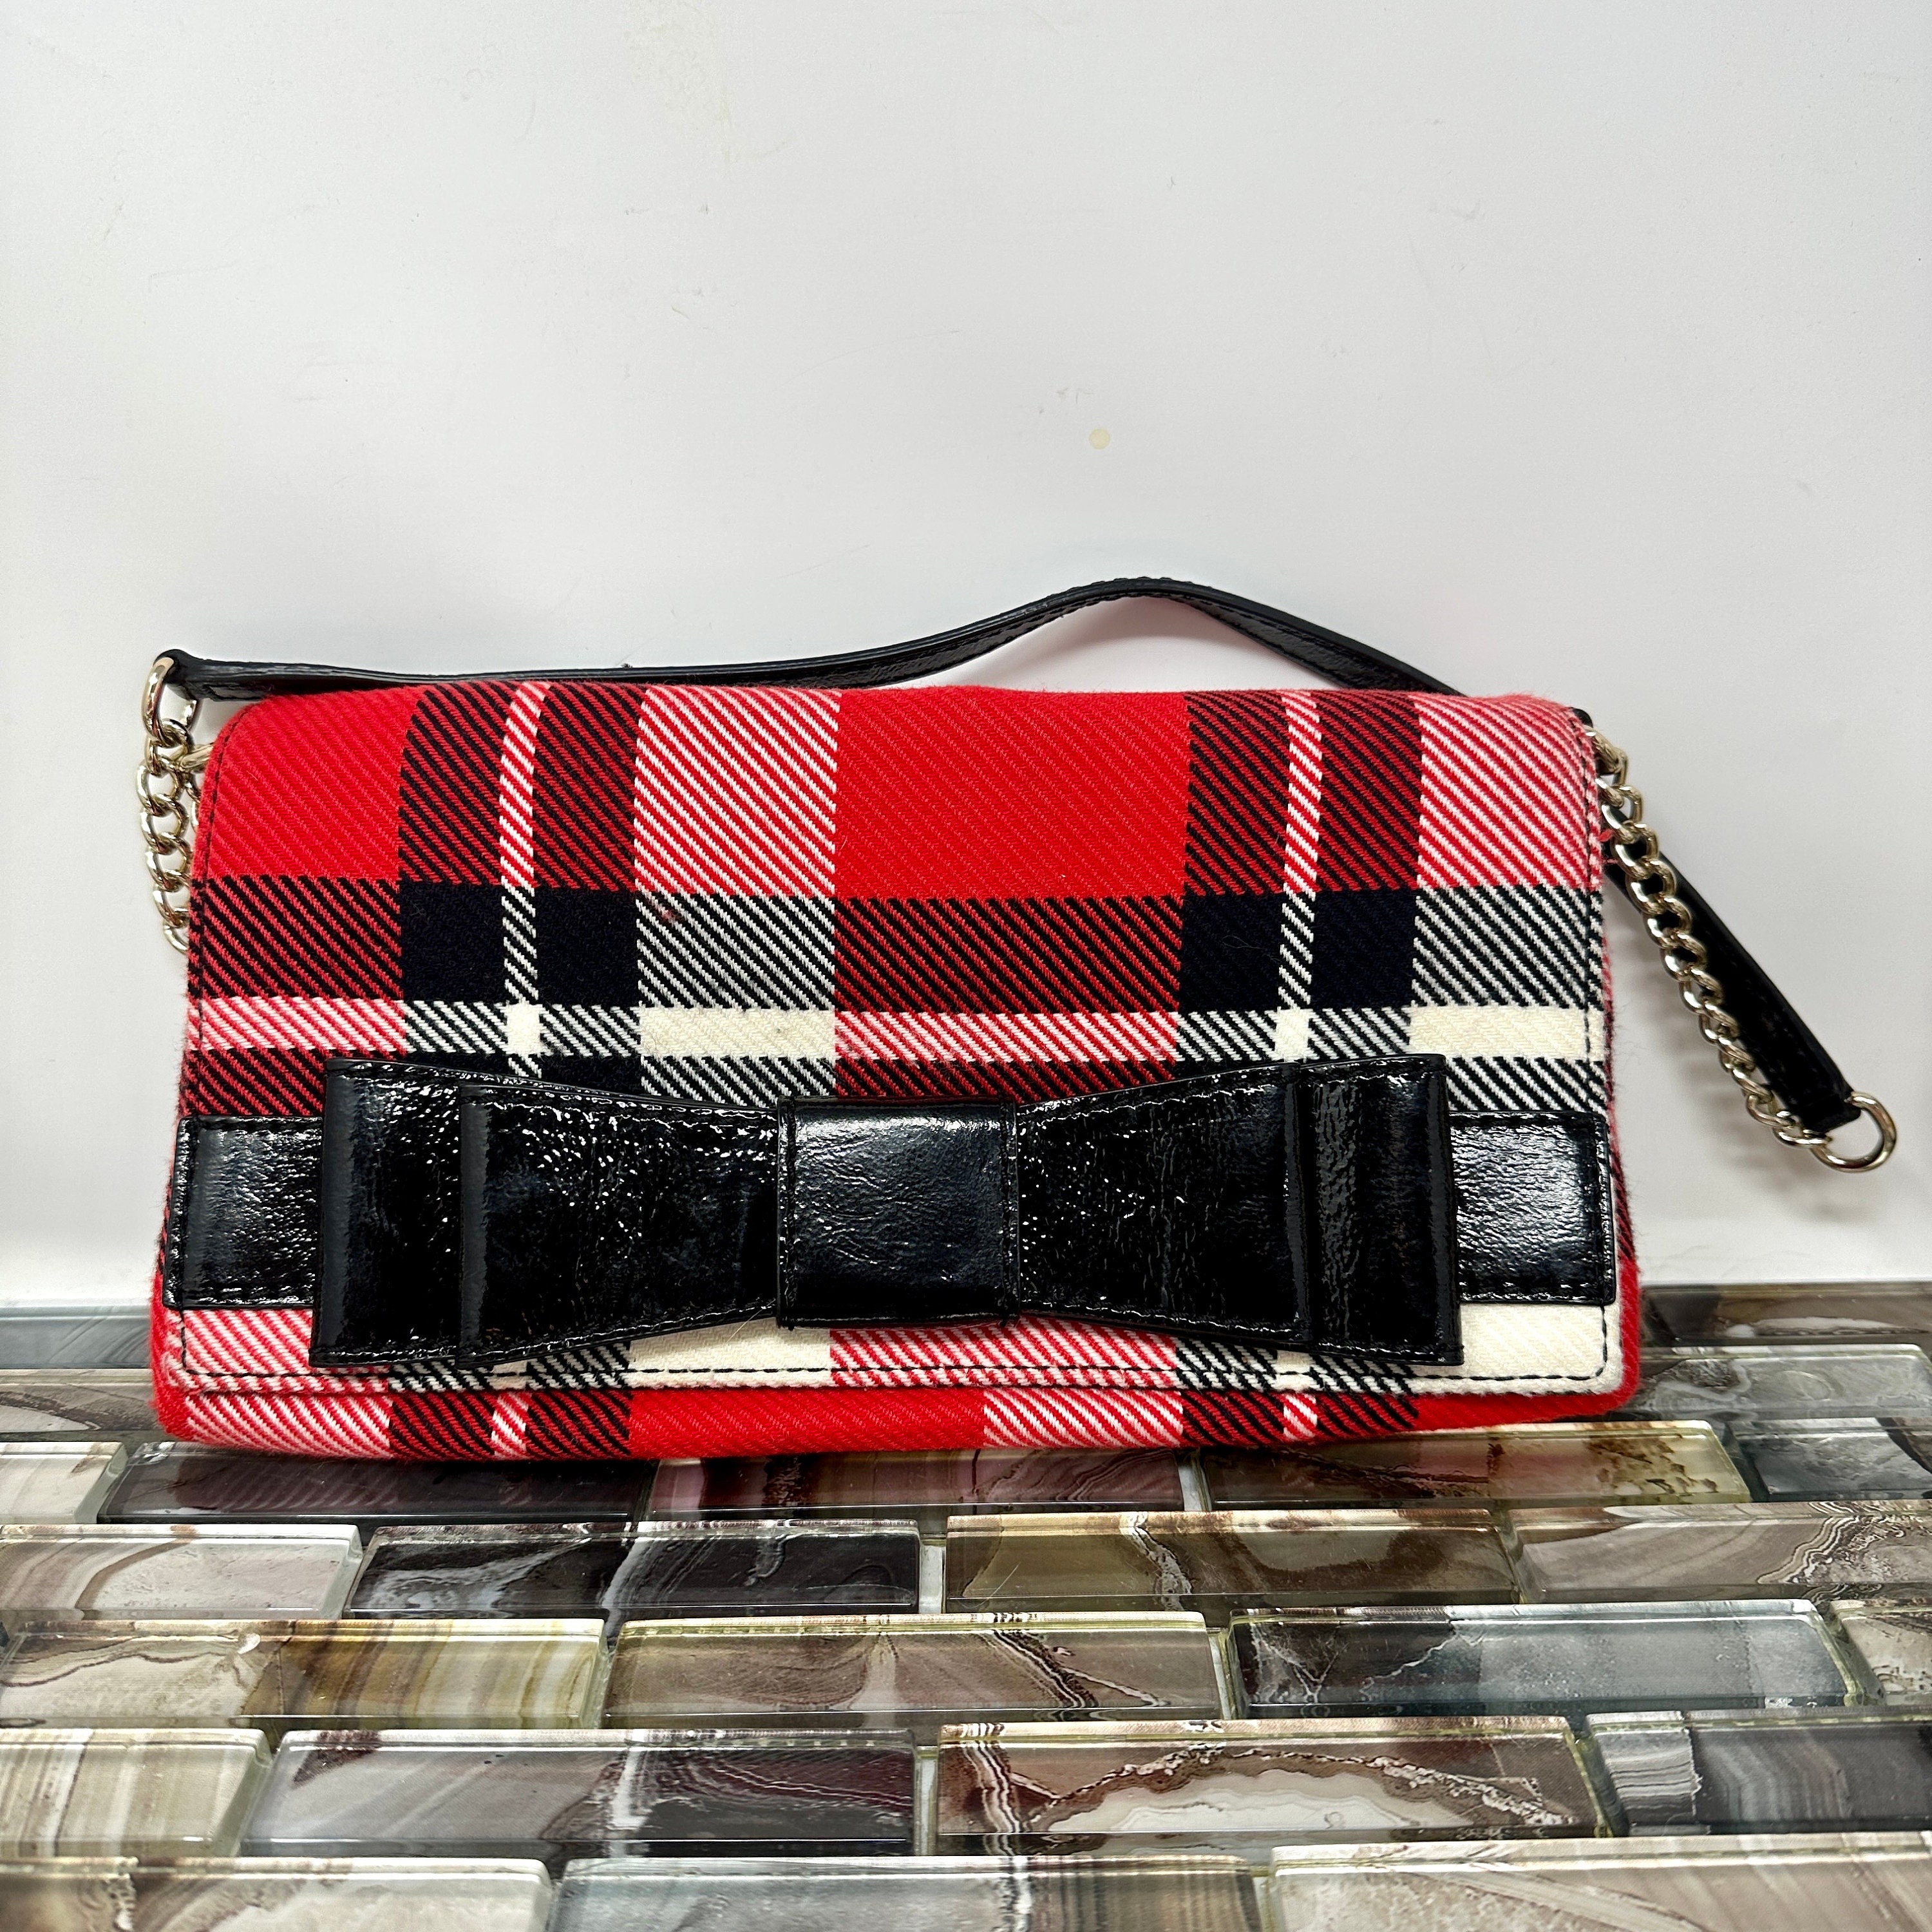 Kate Spade Red Saffiano Leather Crossbody Handbag Purse | eBay